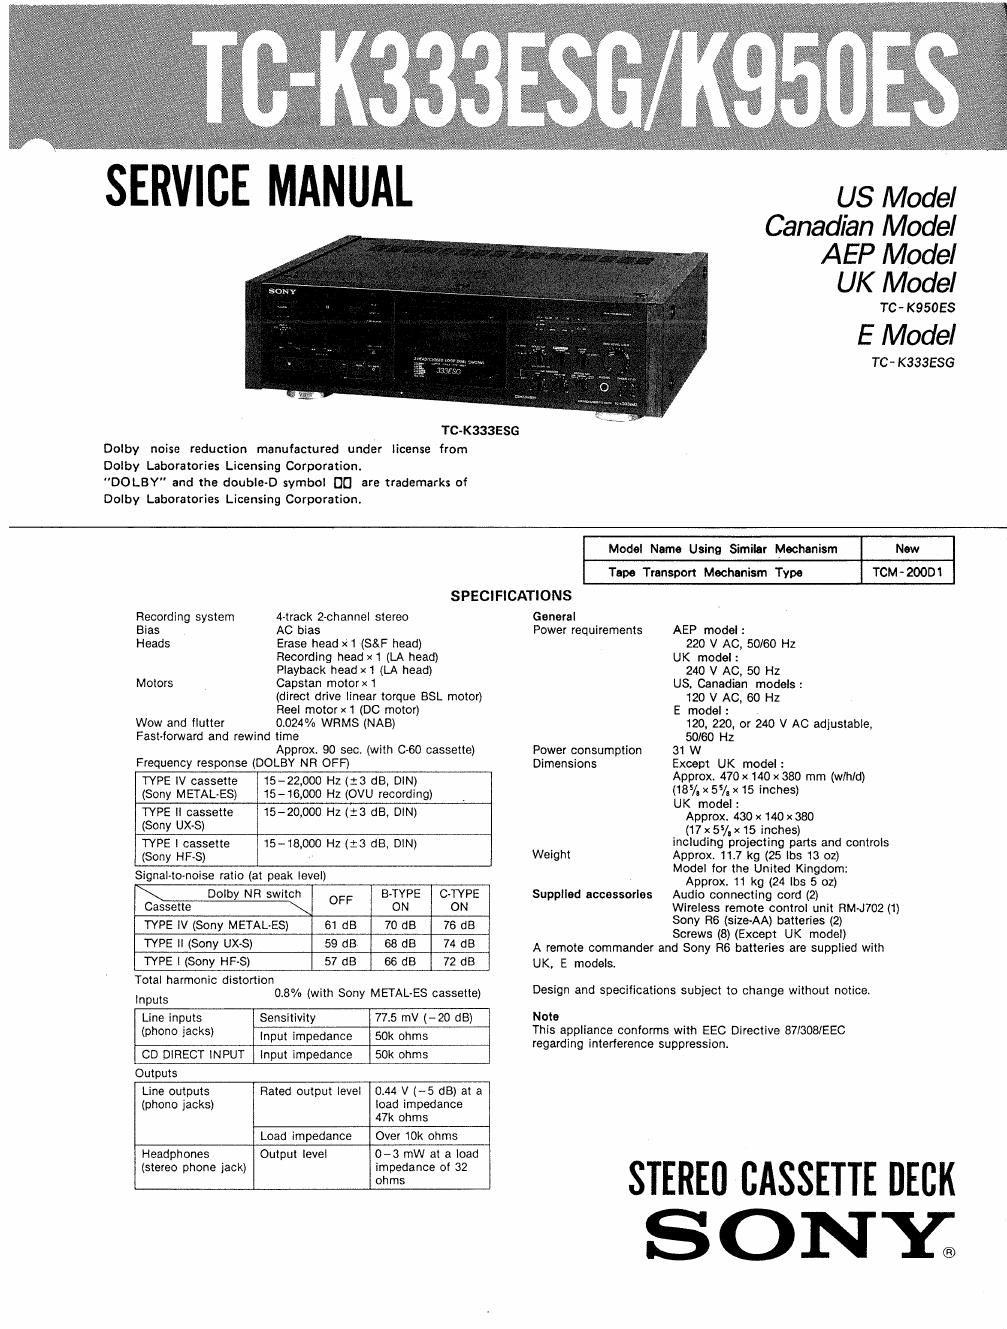 sony tc k 950 es service manual